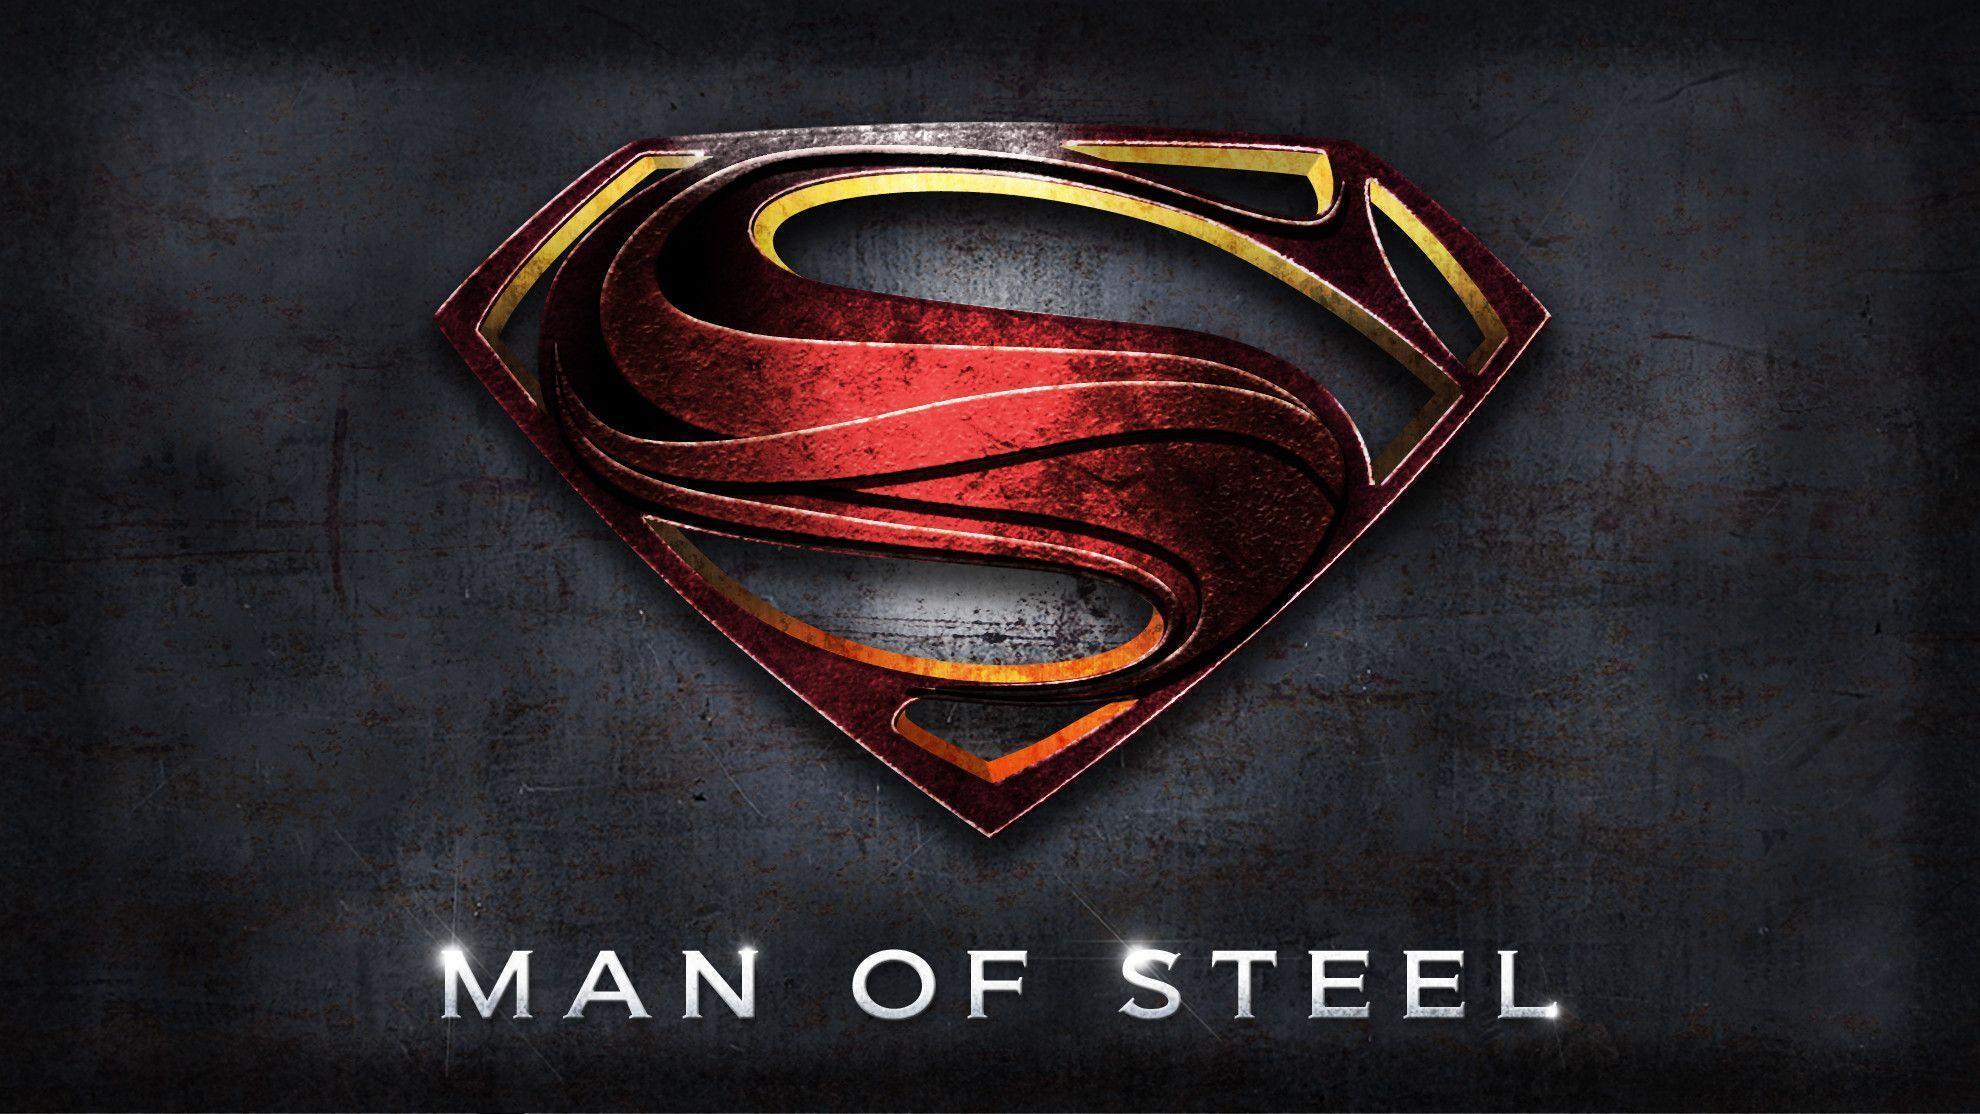 Man Of Steel Logo 8915 Image HD Wallpaper. Wallfoy.com